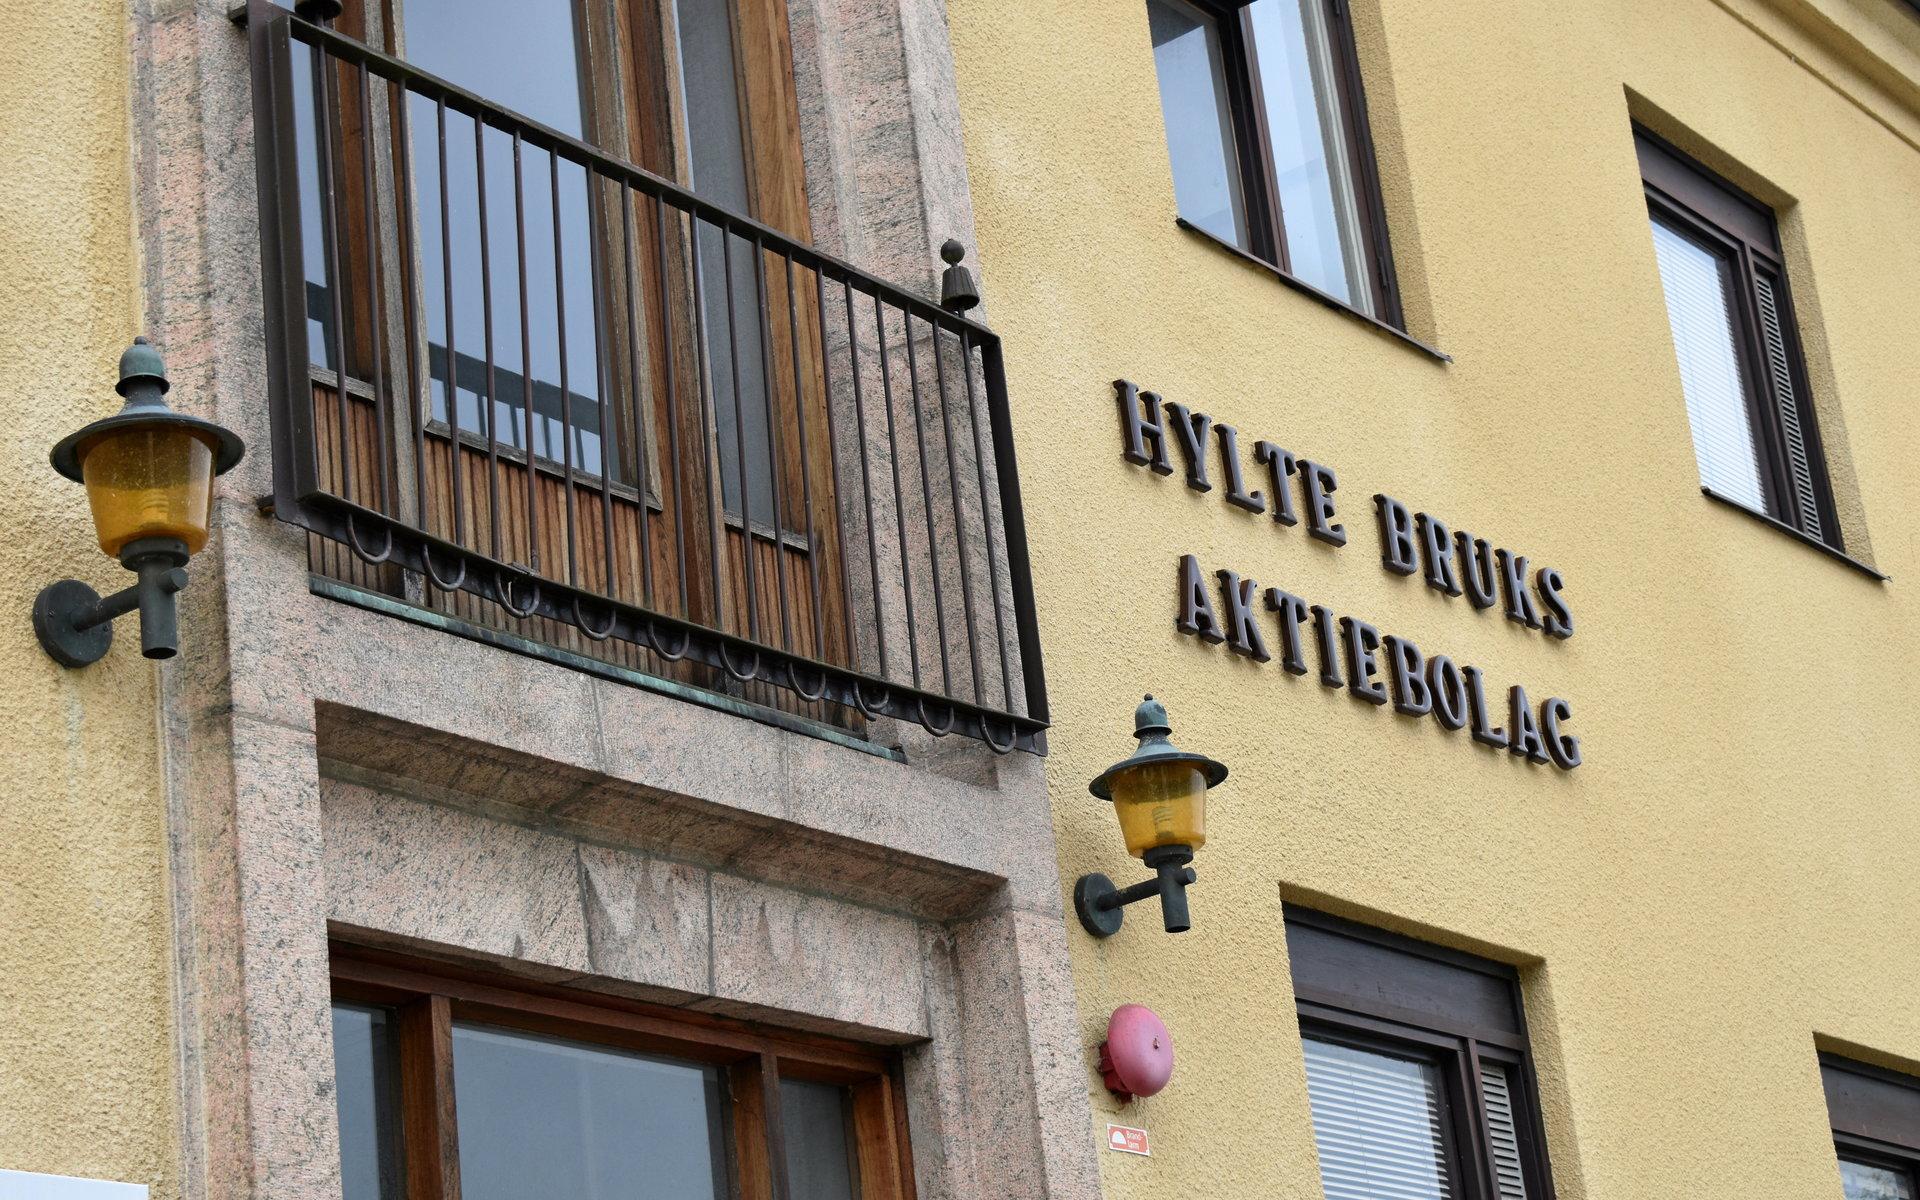 Det gamla brukskontoret ligger mitt i Hyltebruks centrum där Bruksgatan korsar Storgatan.